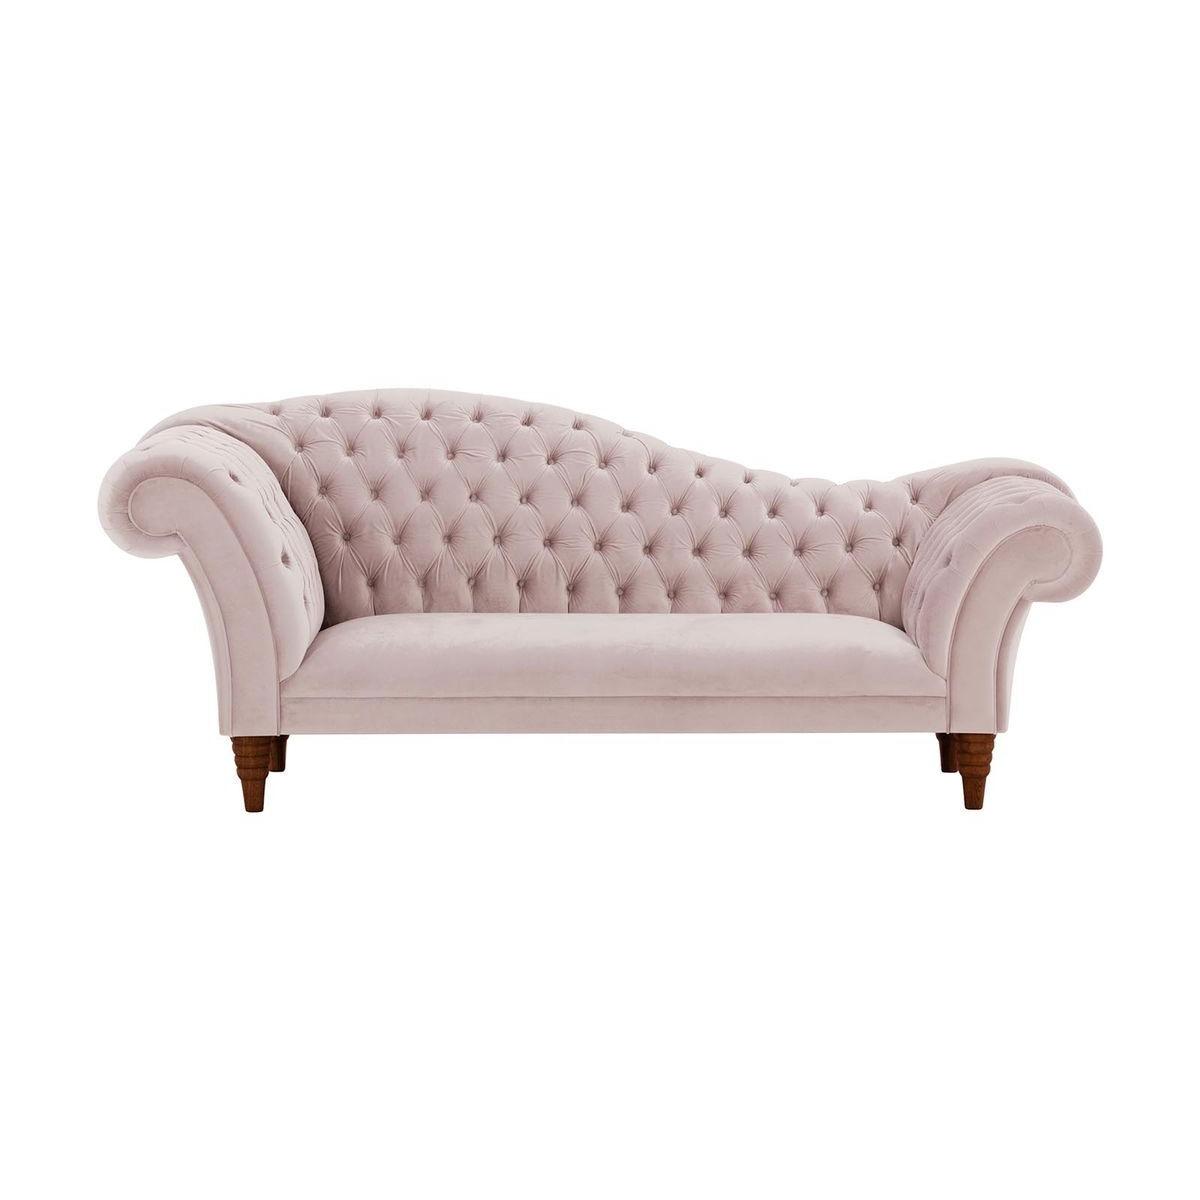 Chester Chaise Lounge Sofa, lilac, Leg colour: dark oak - image 1